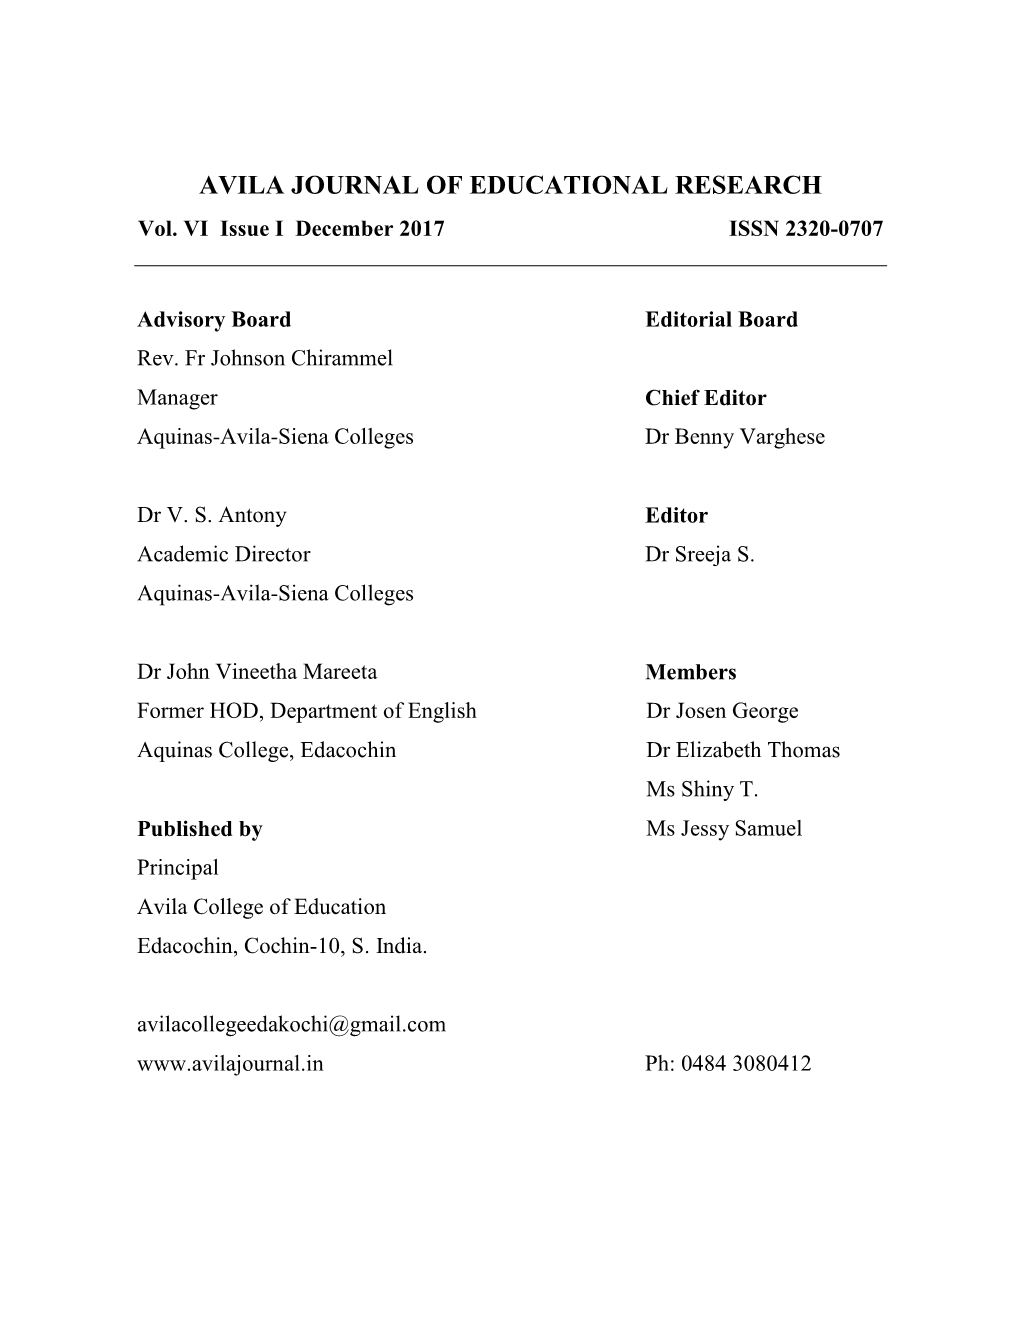 AVILA JOURNAL of EDUCATIONAL RESEARCH Vol